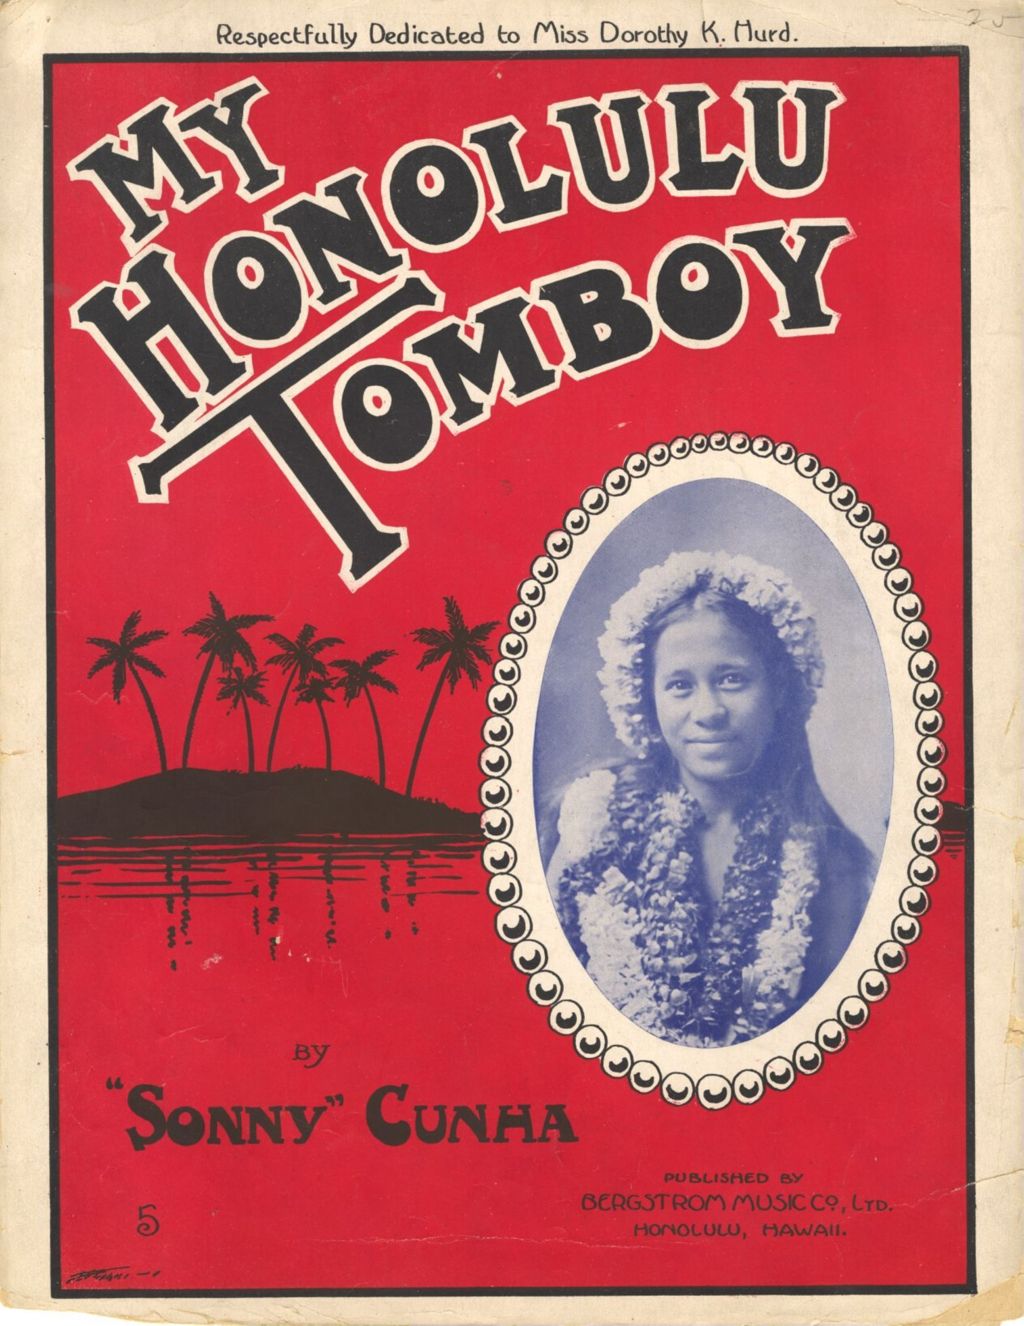 My Honolulu Tom Boy